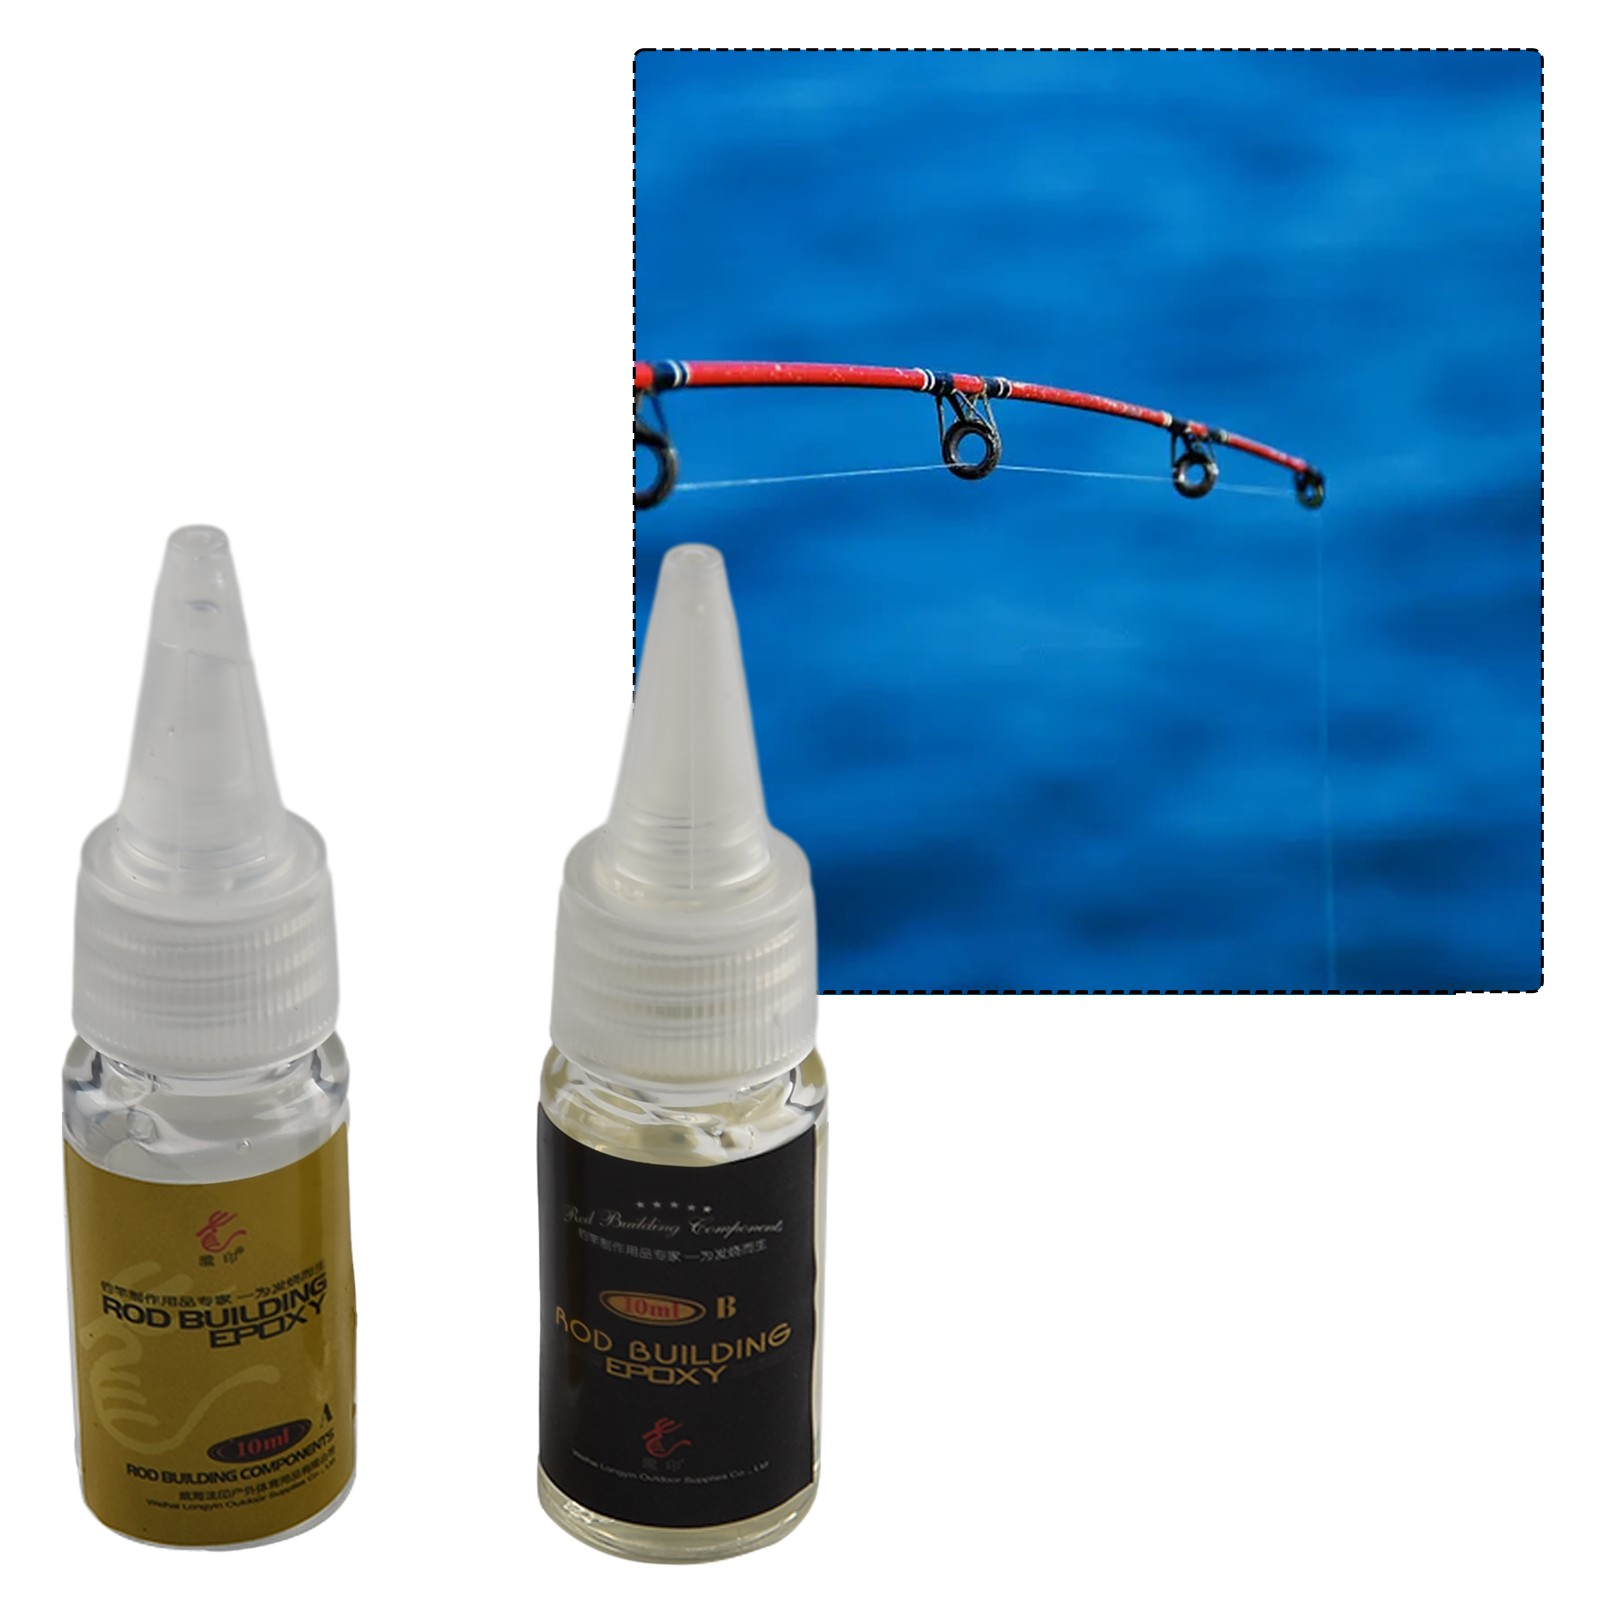 2pcs - Coating Glue Epoxy Fishing Glue Rod Supplies Tackle A/B Building?